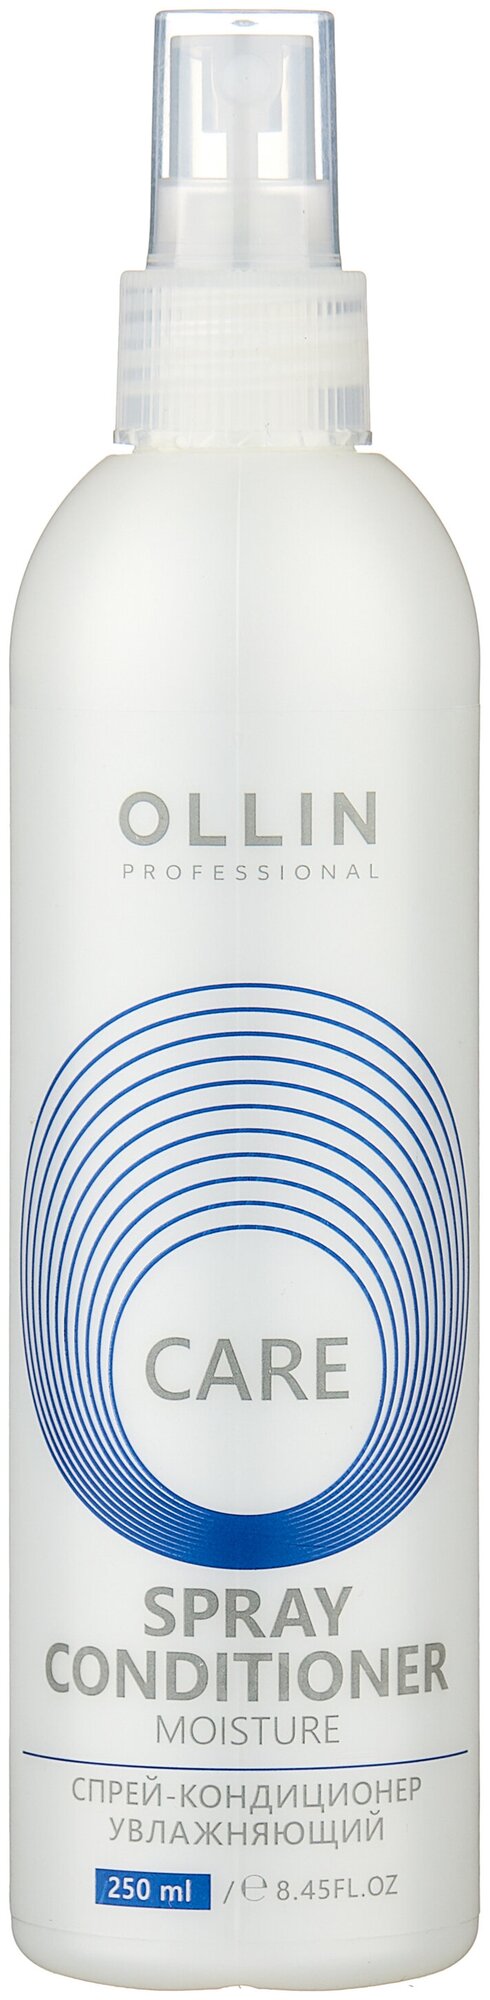 OLLIN Professional Care Спрей – кондиционер увлажняющий для волос